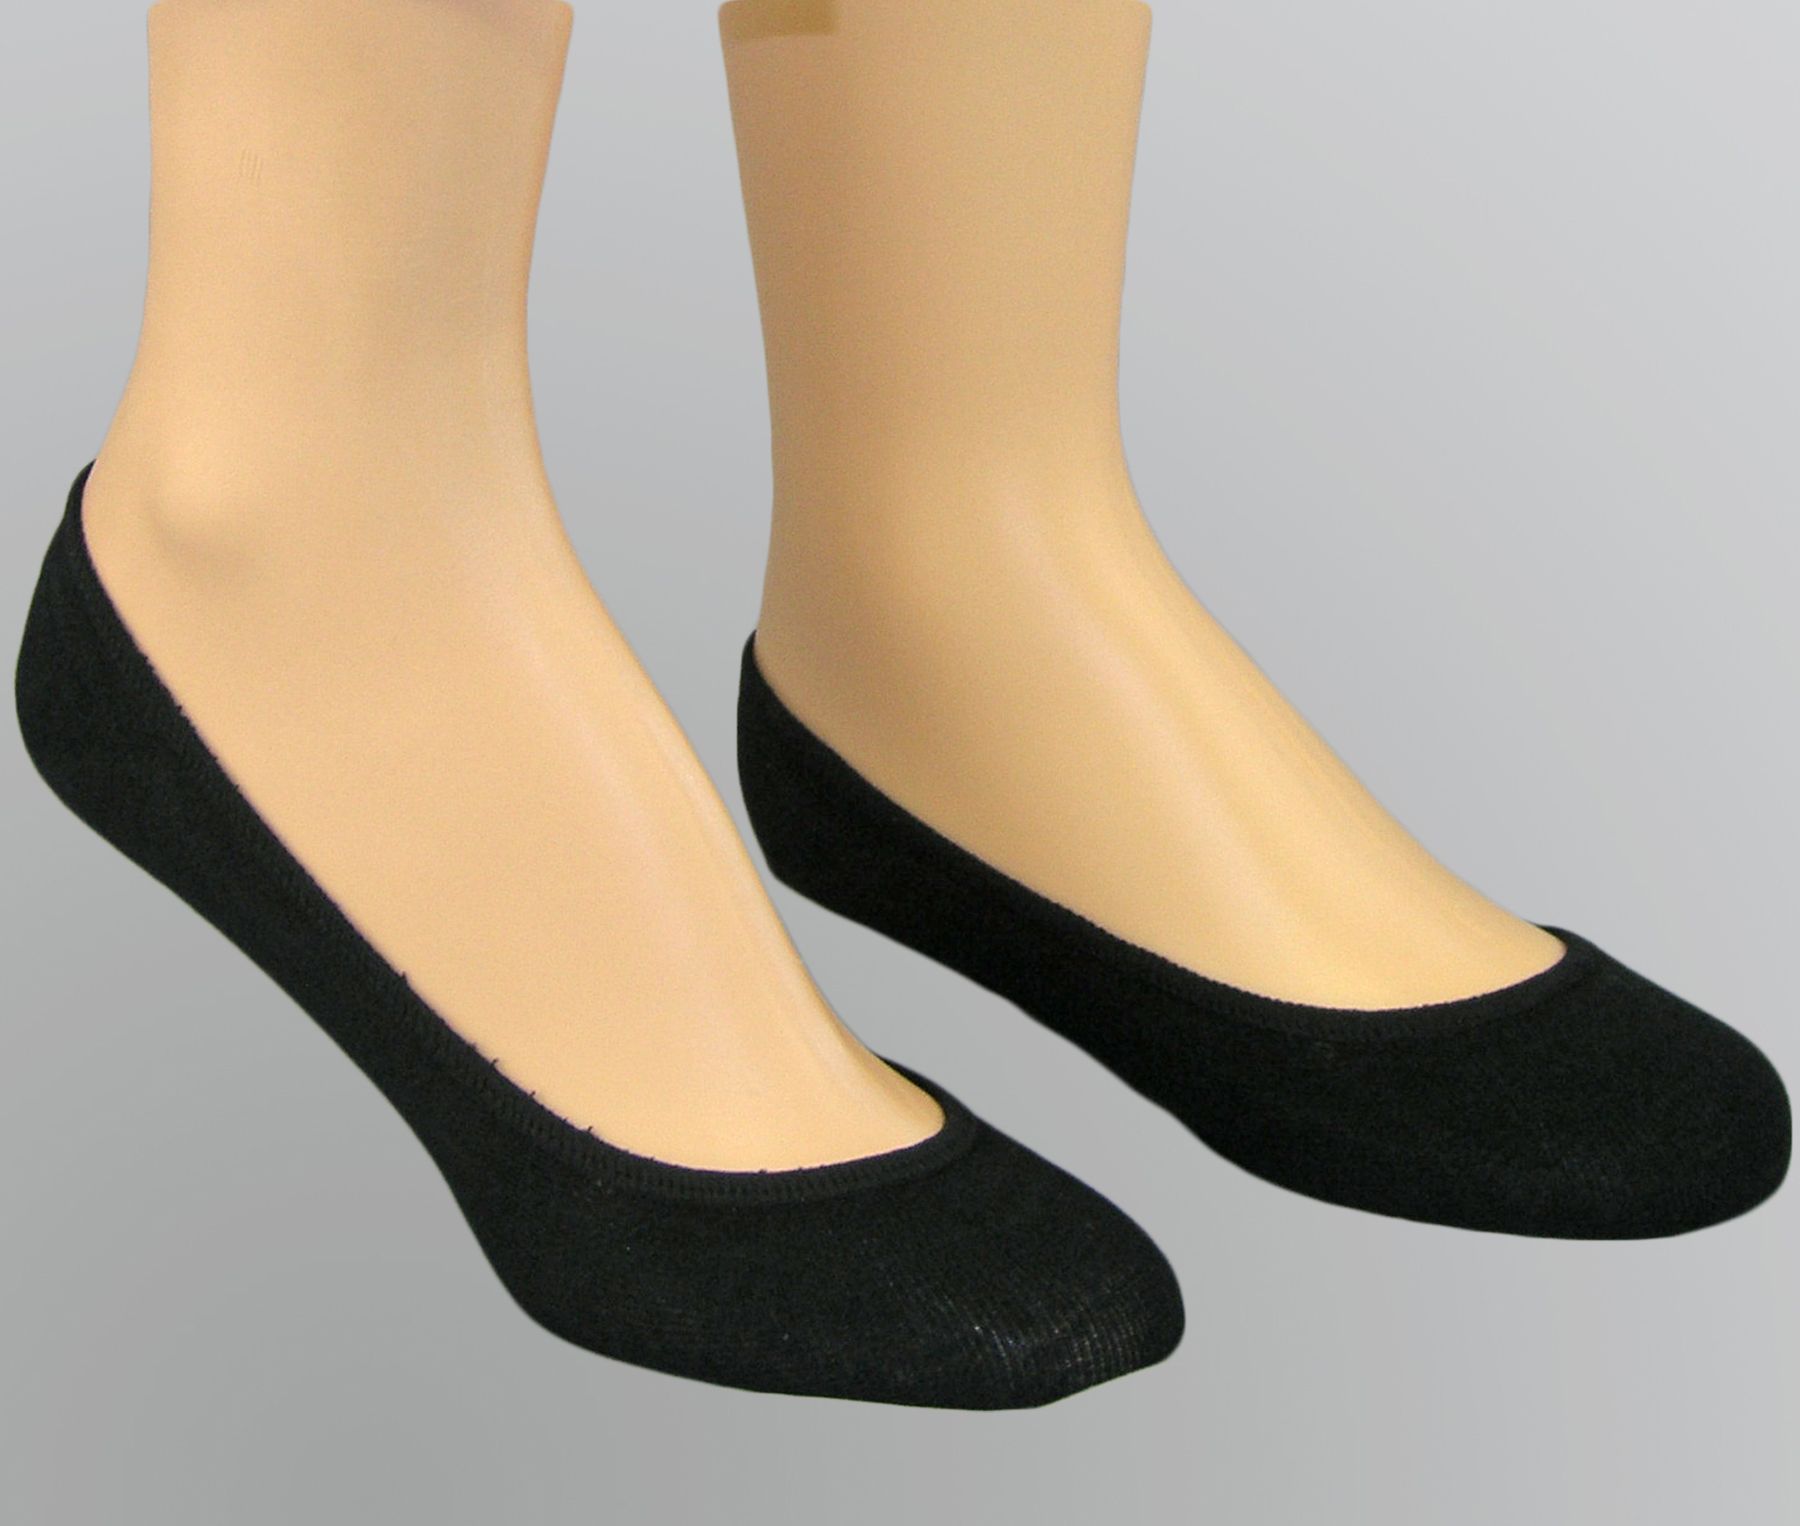 Peds Women's 2-Pairs Liner Socks